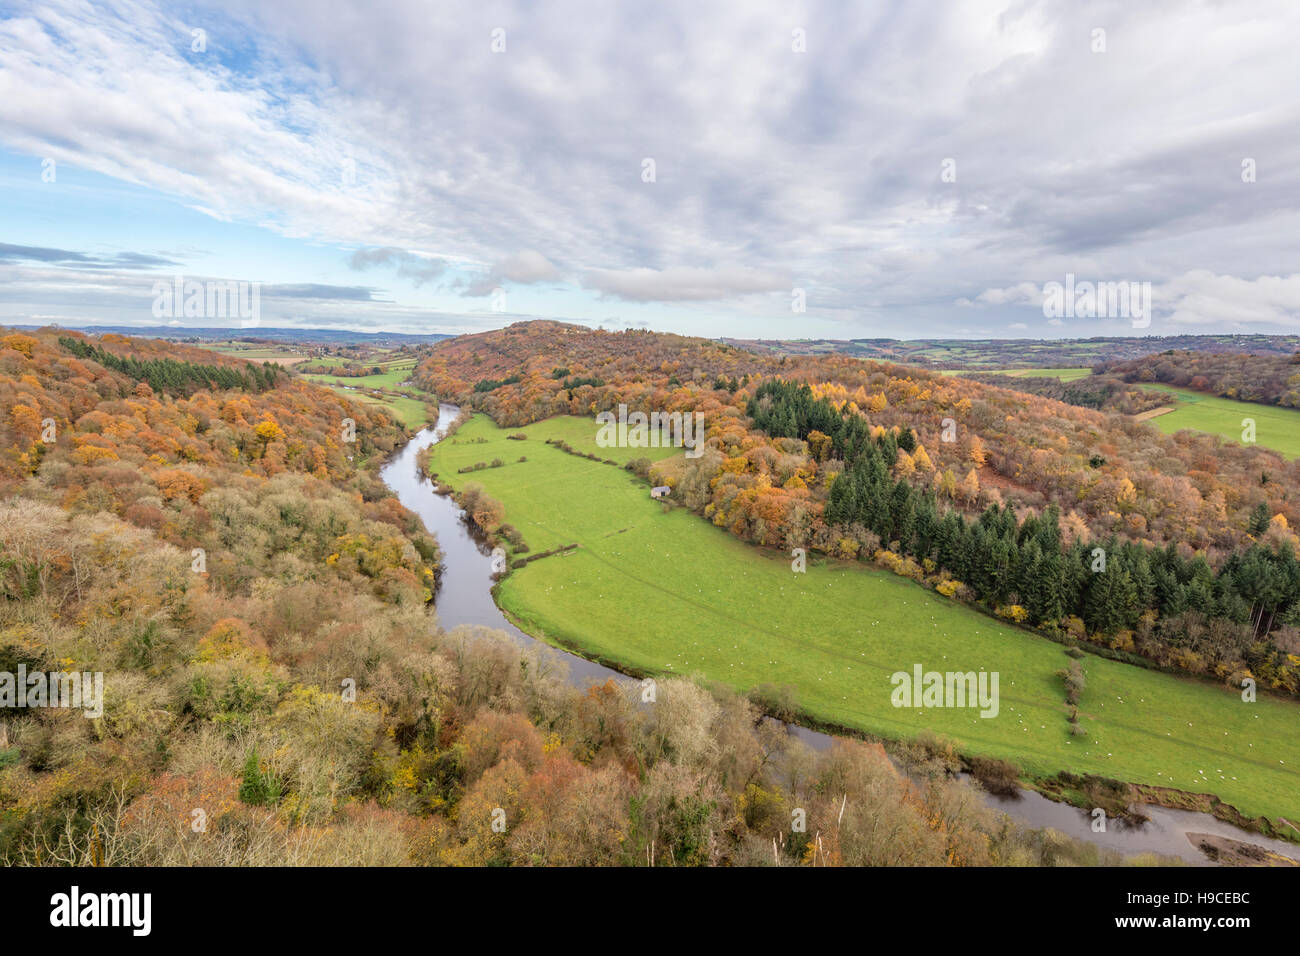 Autumn over the River Wye from Symonds Yat Rock, Gloucestershire, England, UK Stock Photo